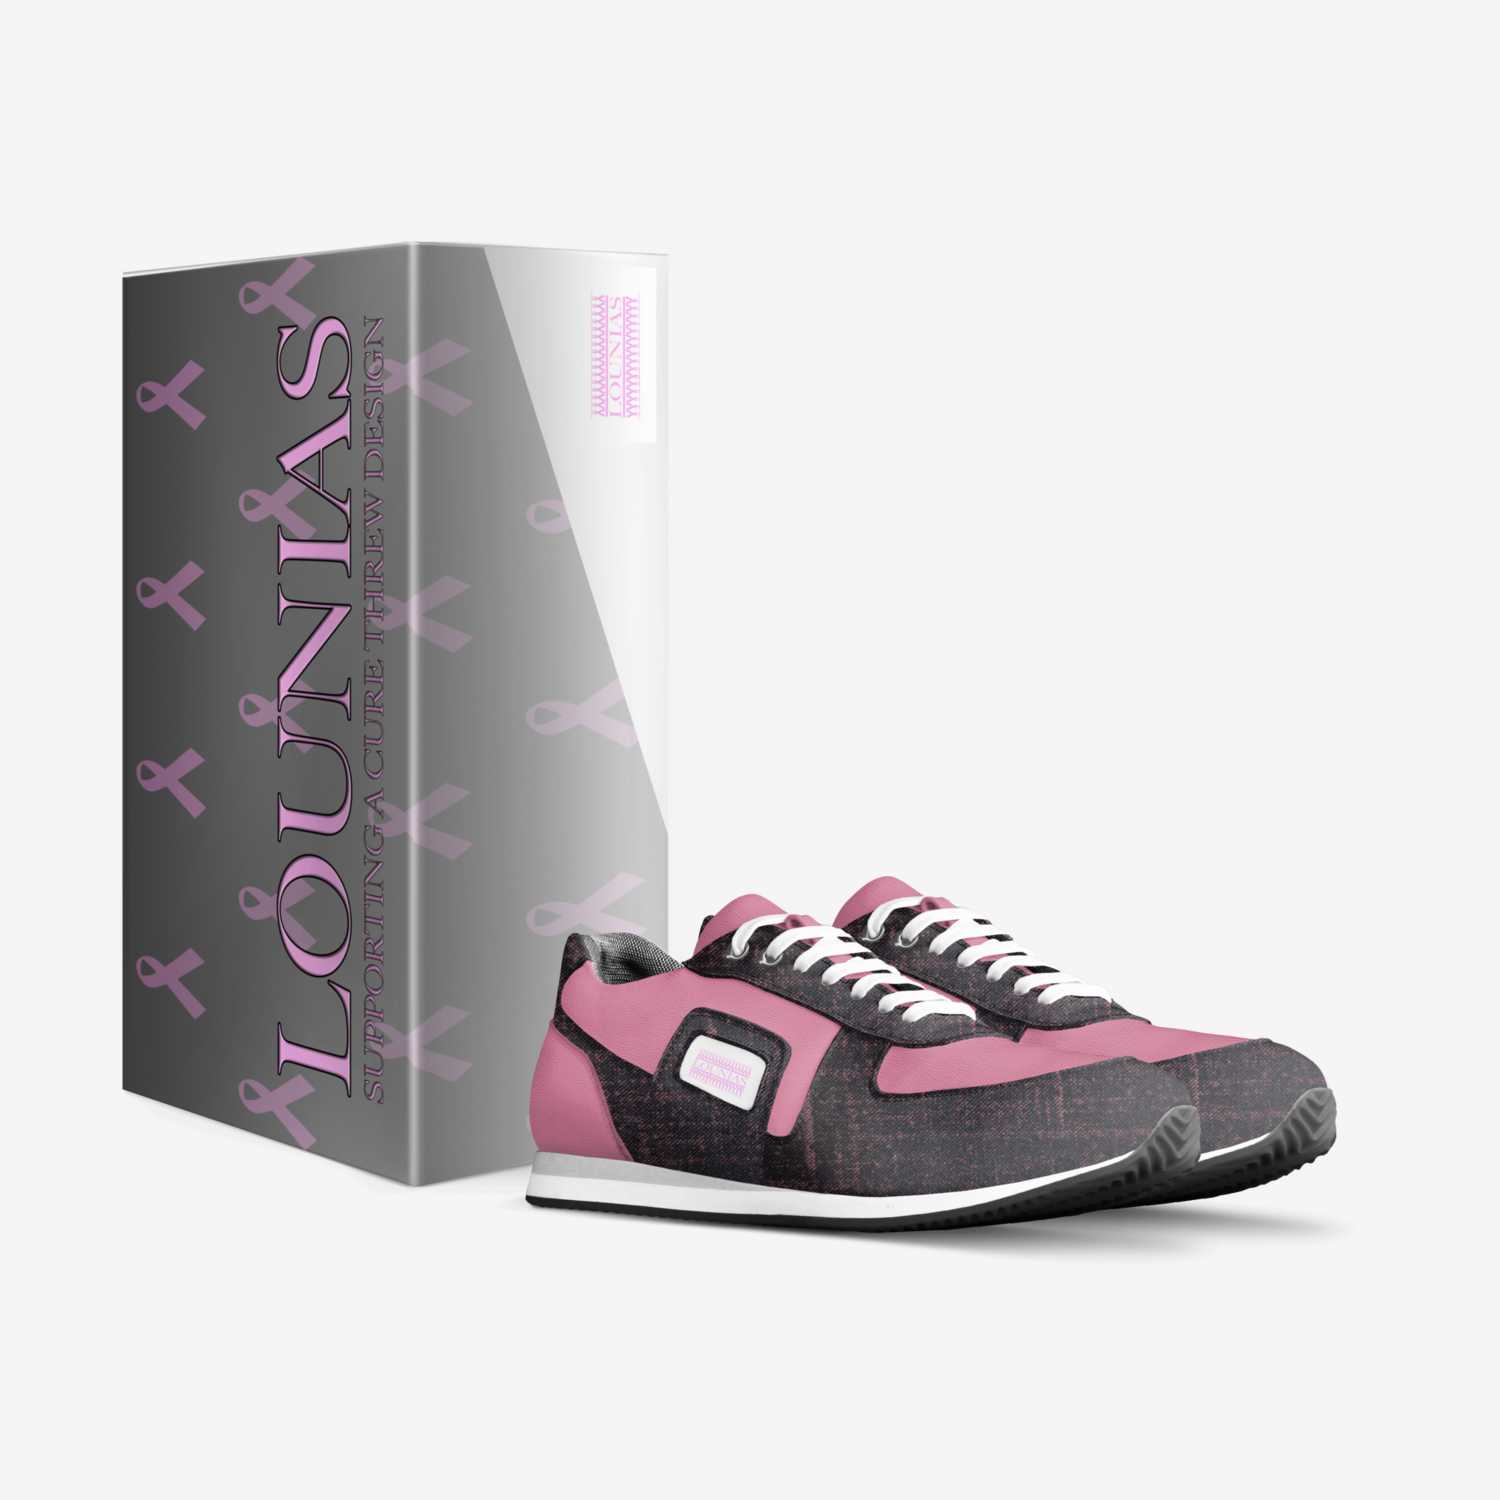 Lounias custom made in Italy shoes by Antonio Murphy | Box view